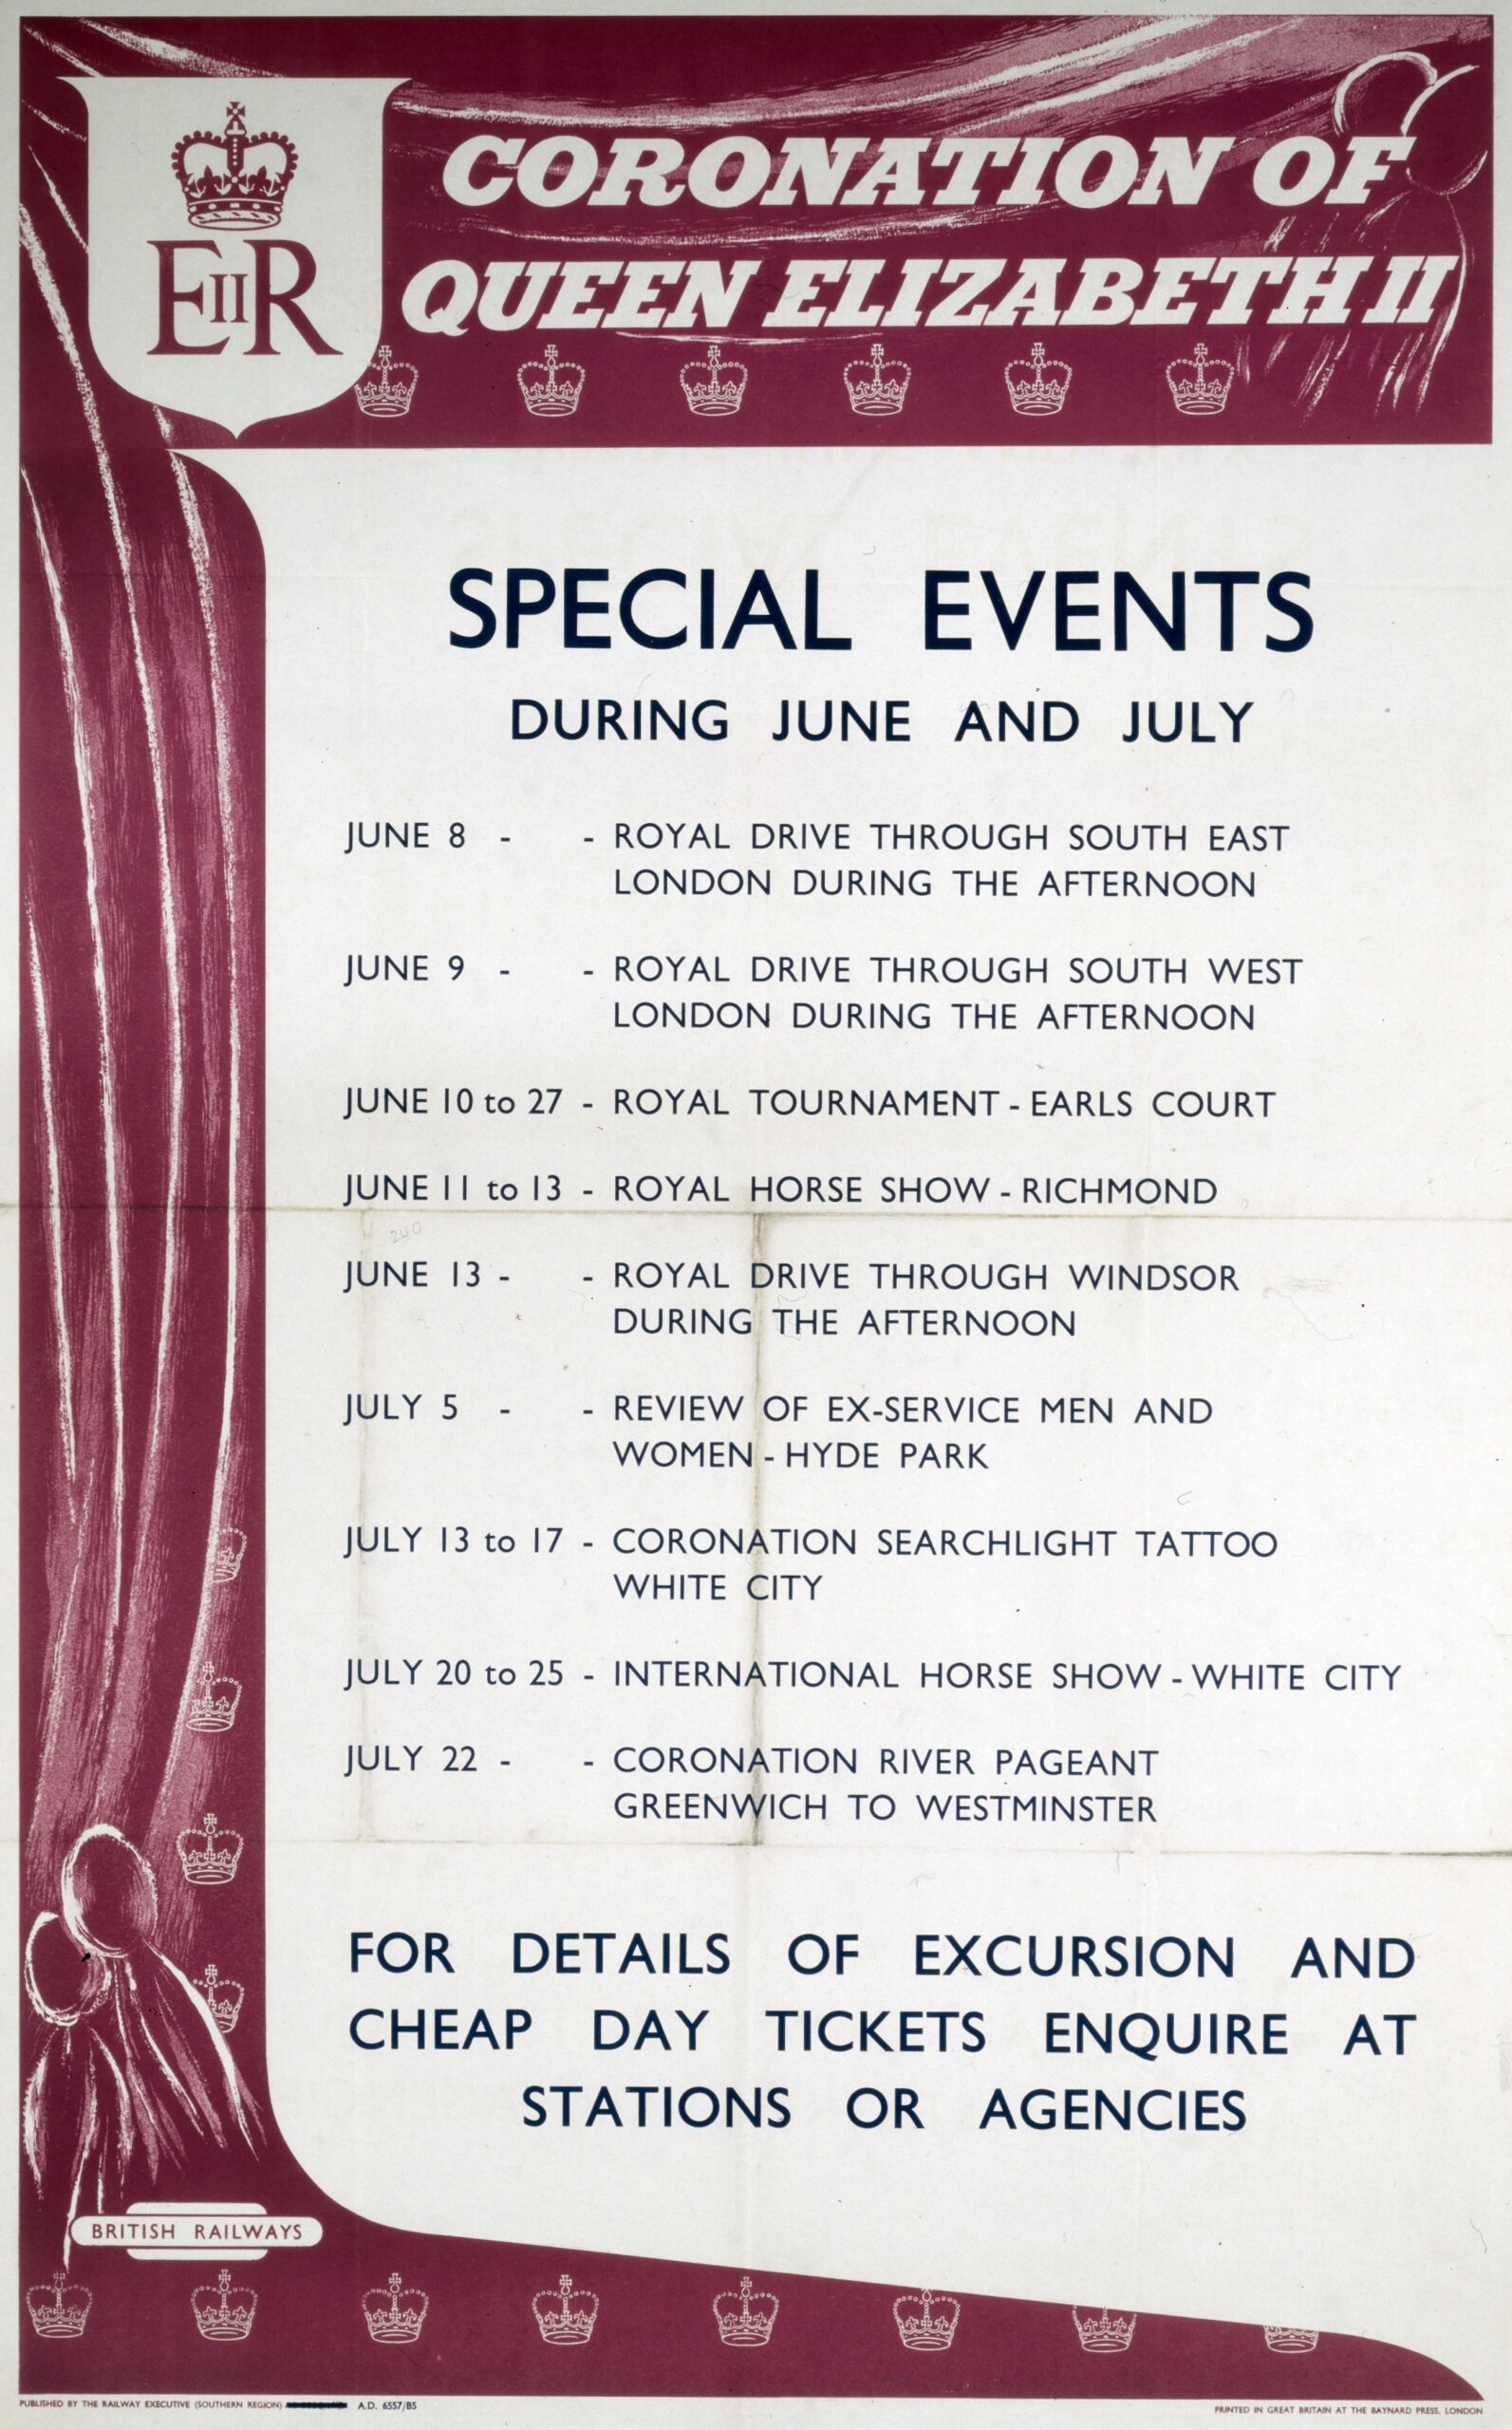 Coronation of Queen Elizabeth II - Special Events', BR (SR) poster, 1953.